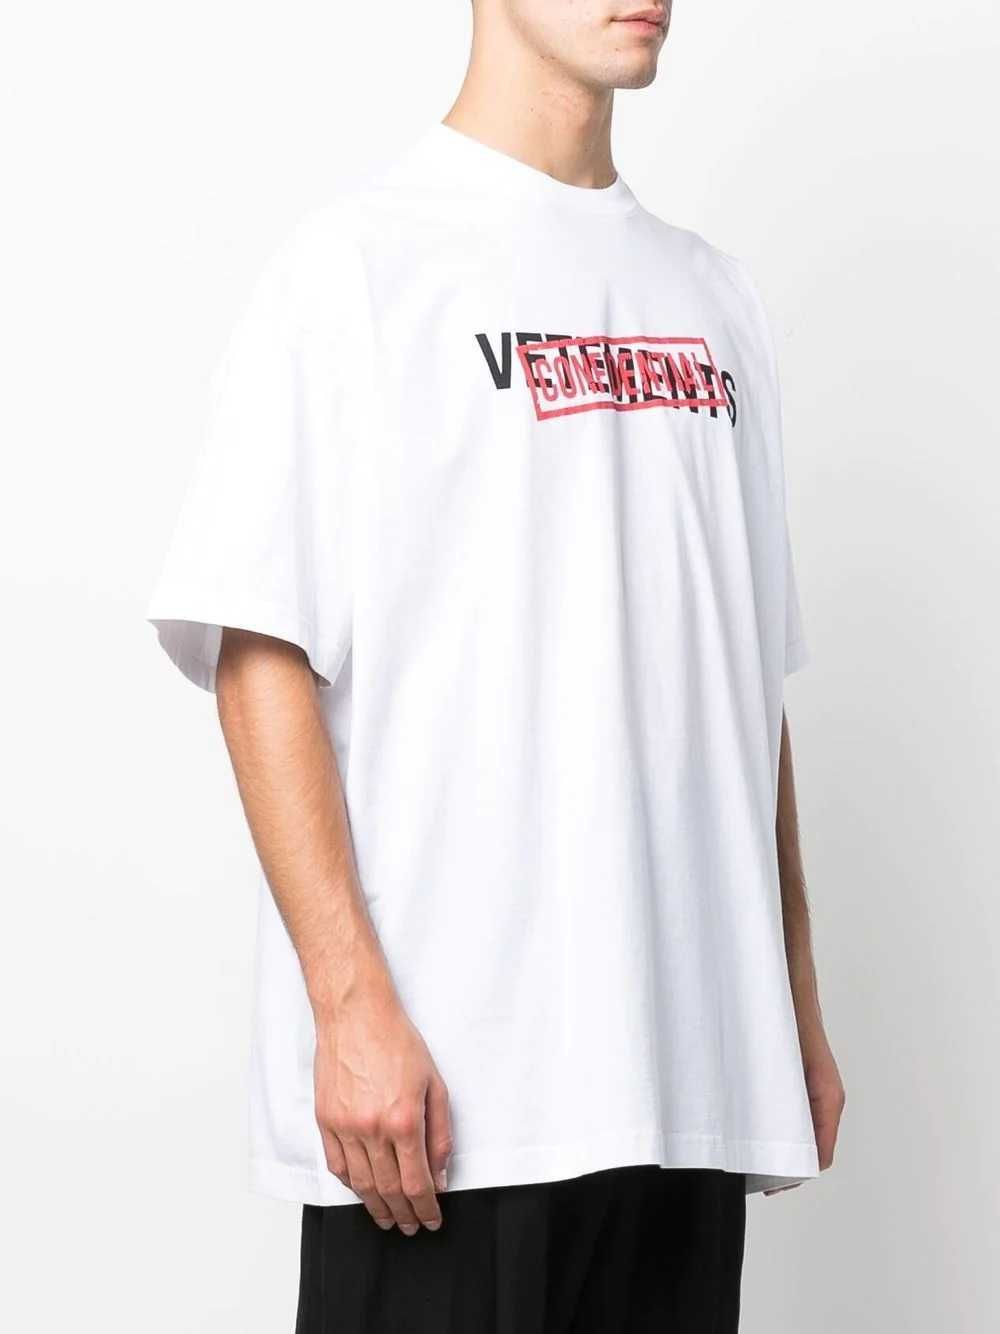 VETEMENTS White Confidential Logo Oversized Тениска M (XL) и L (XXL)